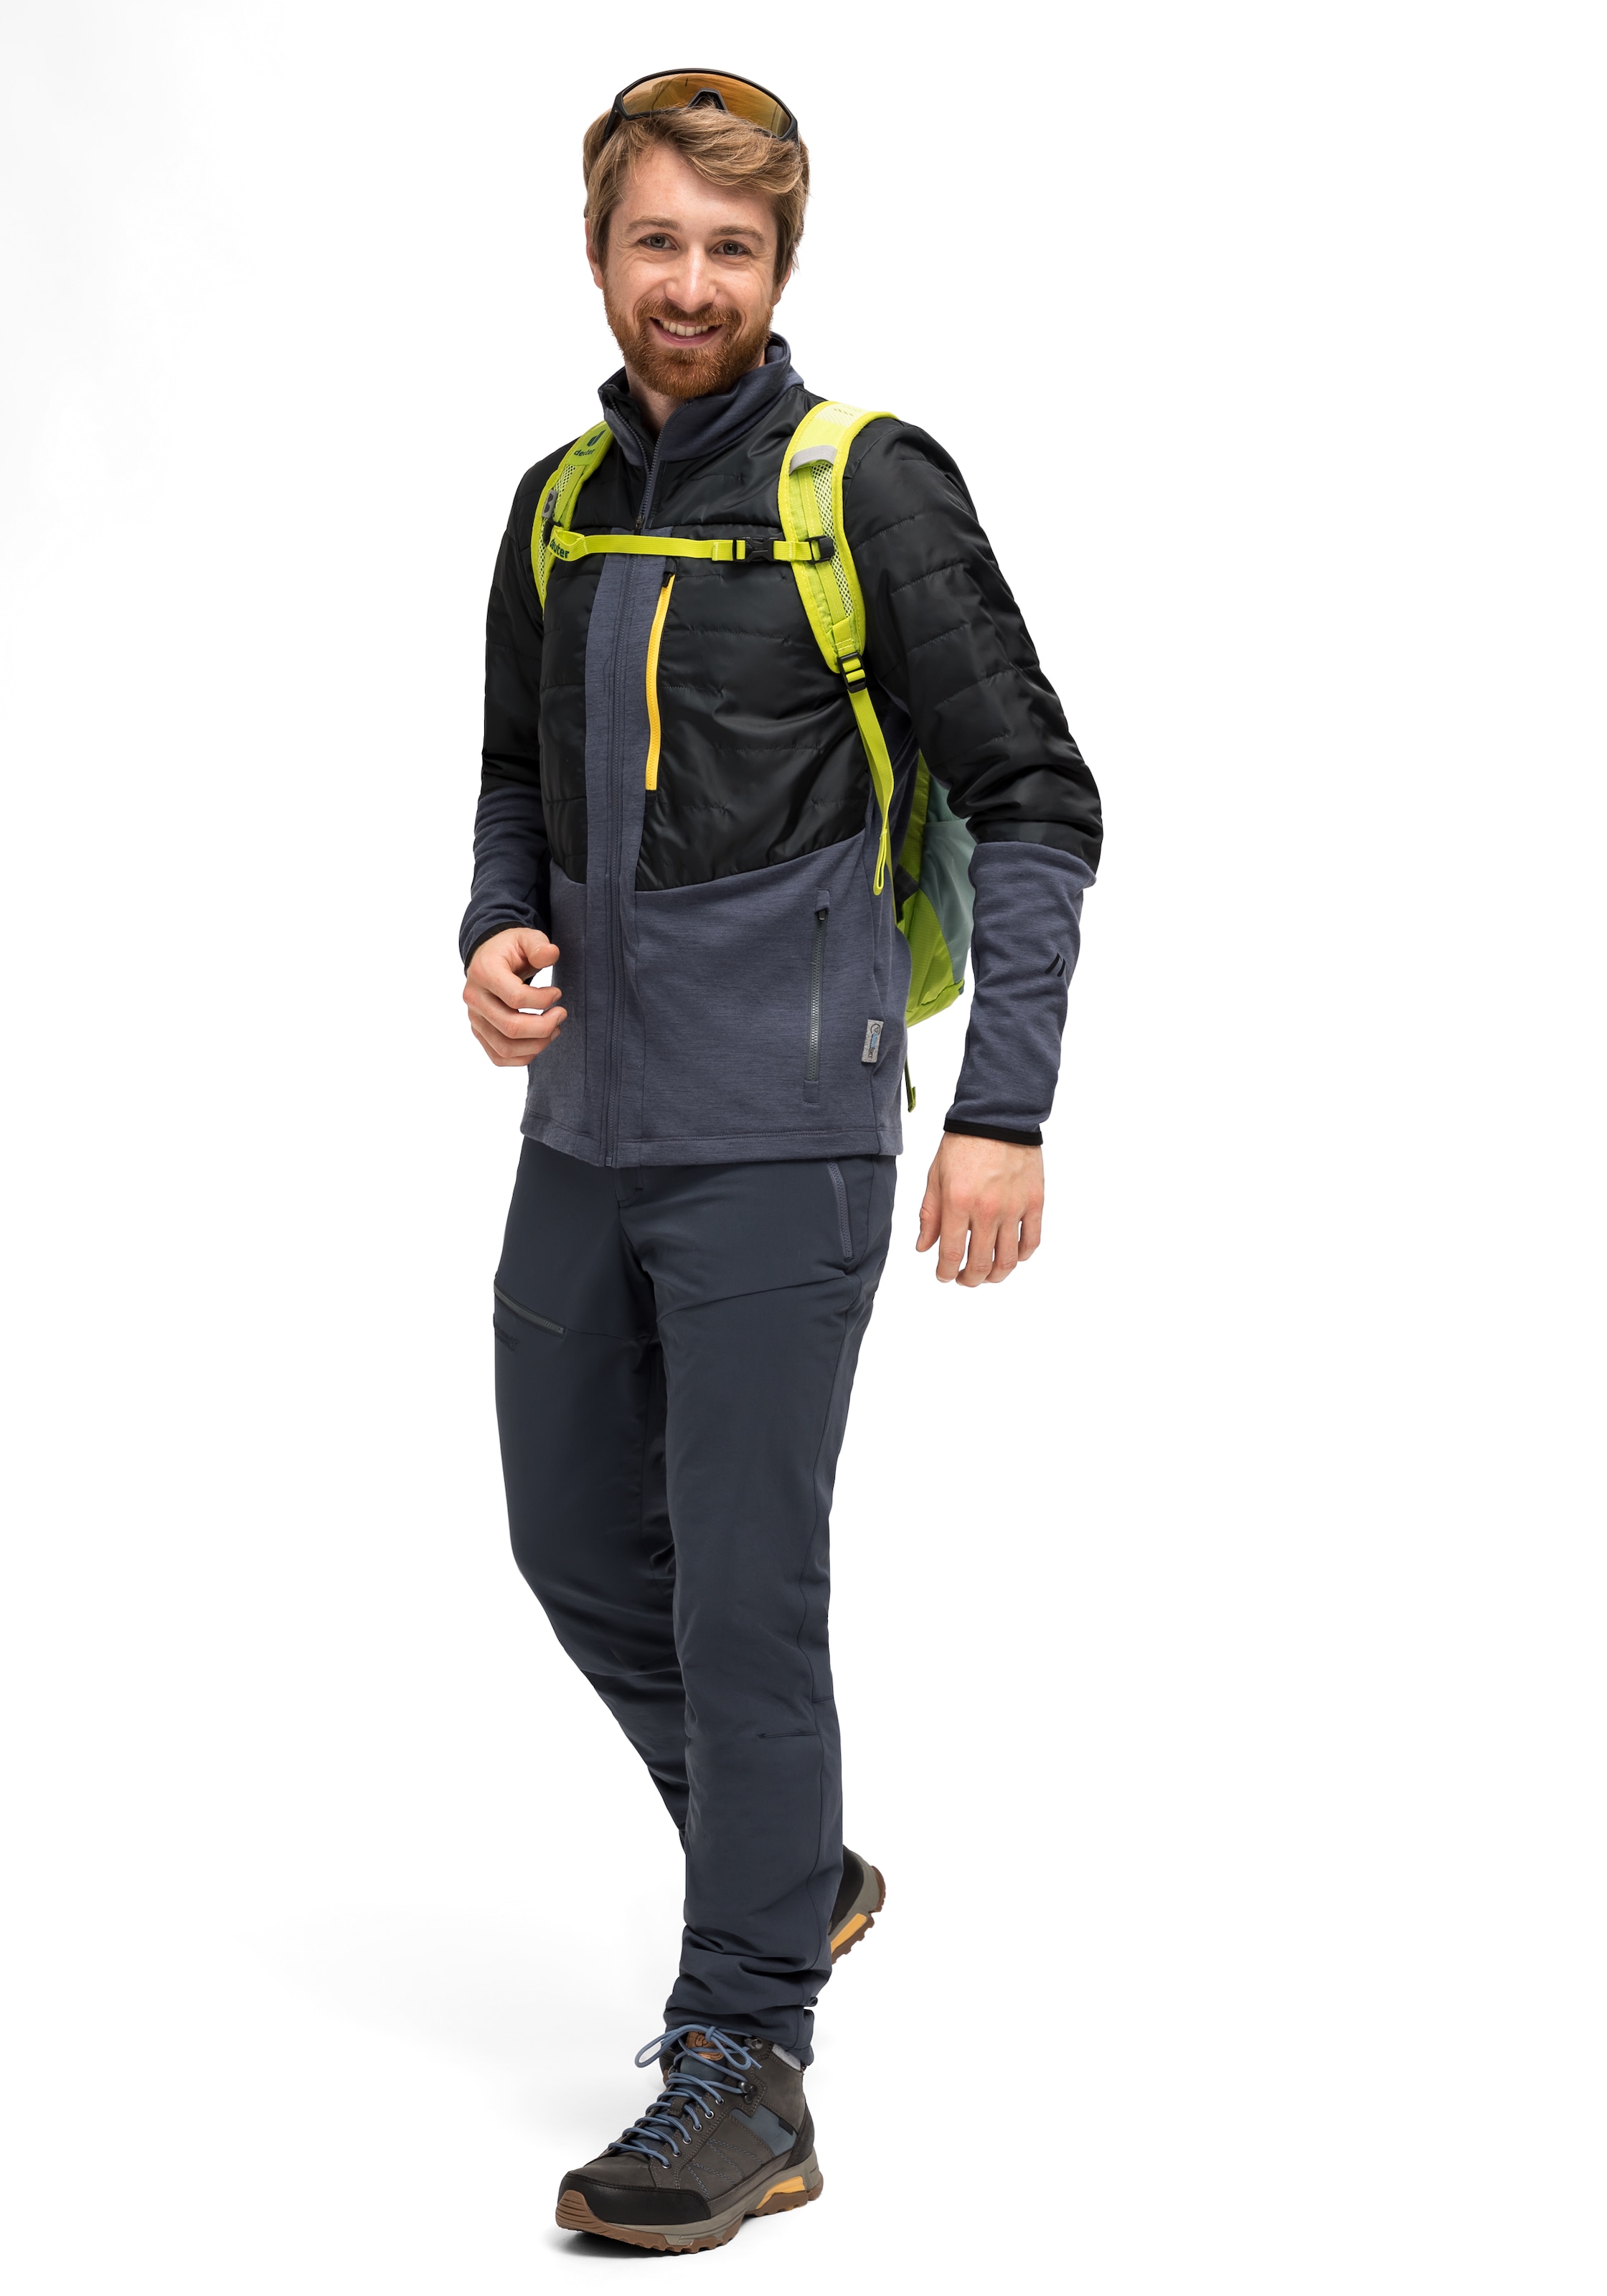 Trekking-Jacke Sports bei bestellen OTTO wattiert, atmungsaktive mit »Lanus Outdoorjacke Taschen 3 online Herren M«, Wanderjacke Maier